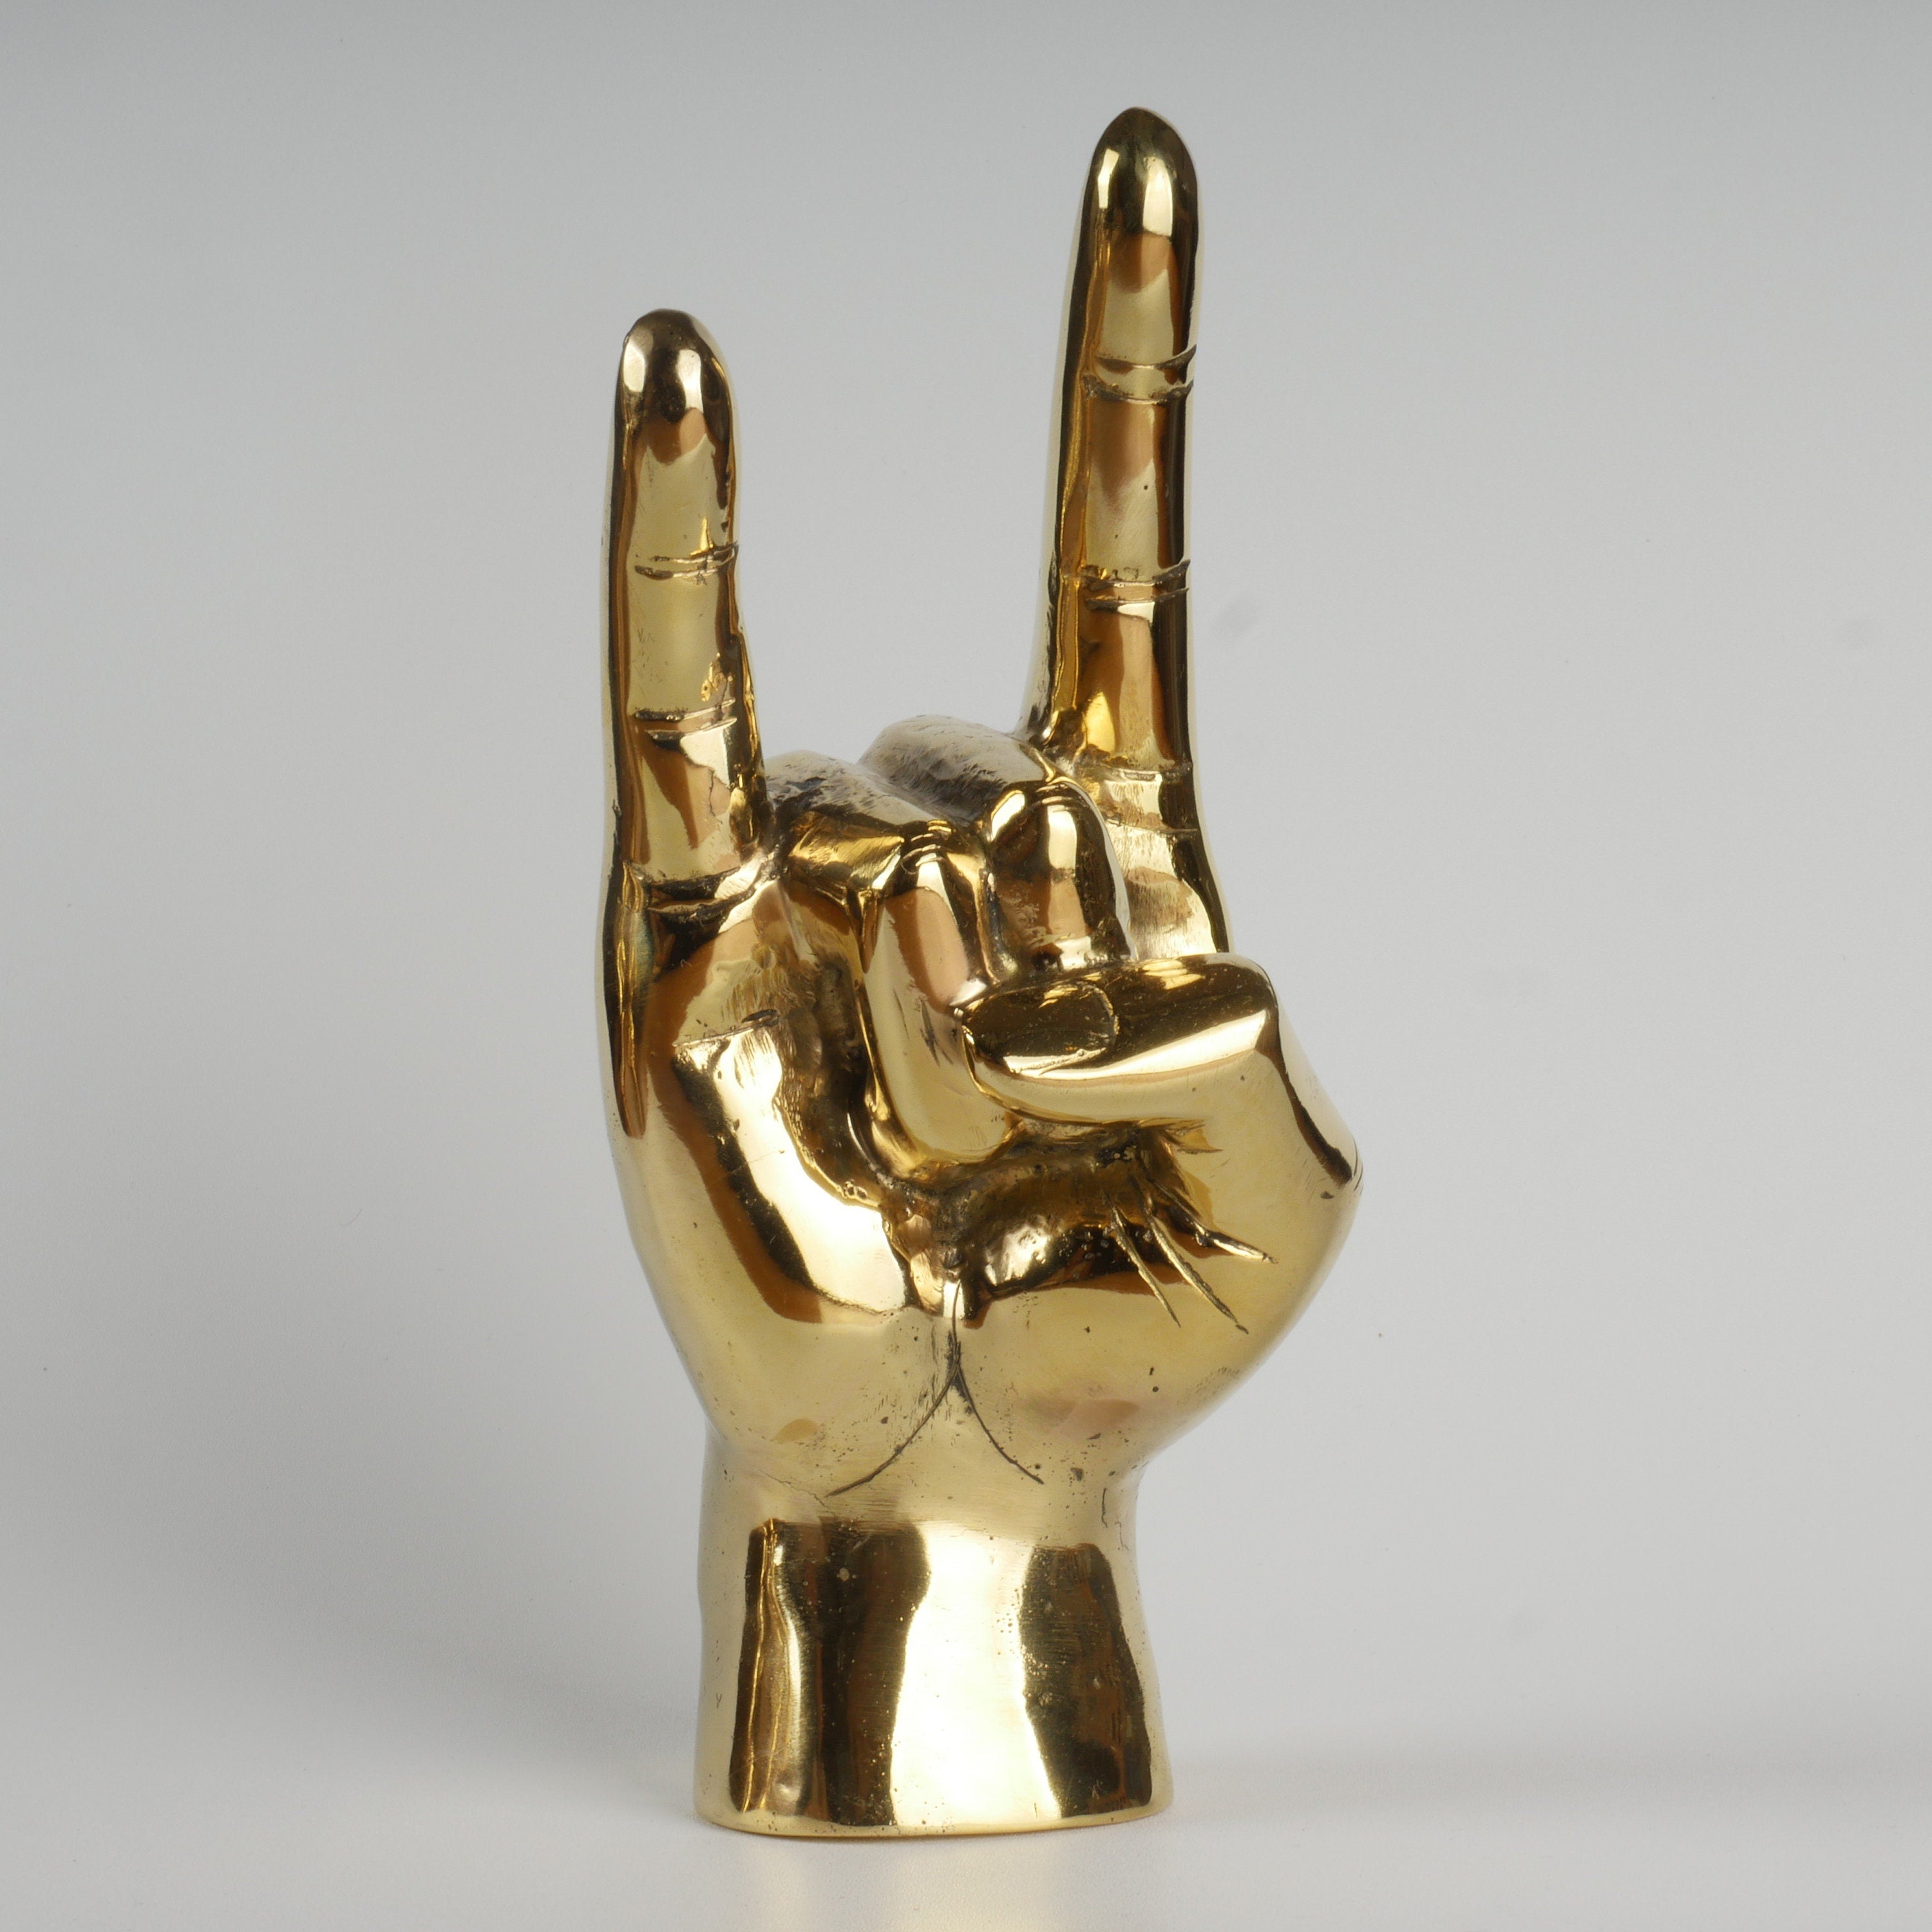 9” Tall Brass Hand Sculpture with Texas Longhorns "Hook 'Em Horns" Like Hand Gesture; Shelf or Table Hand Figure – Made of Polished Brass